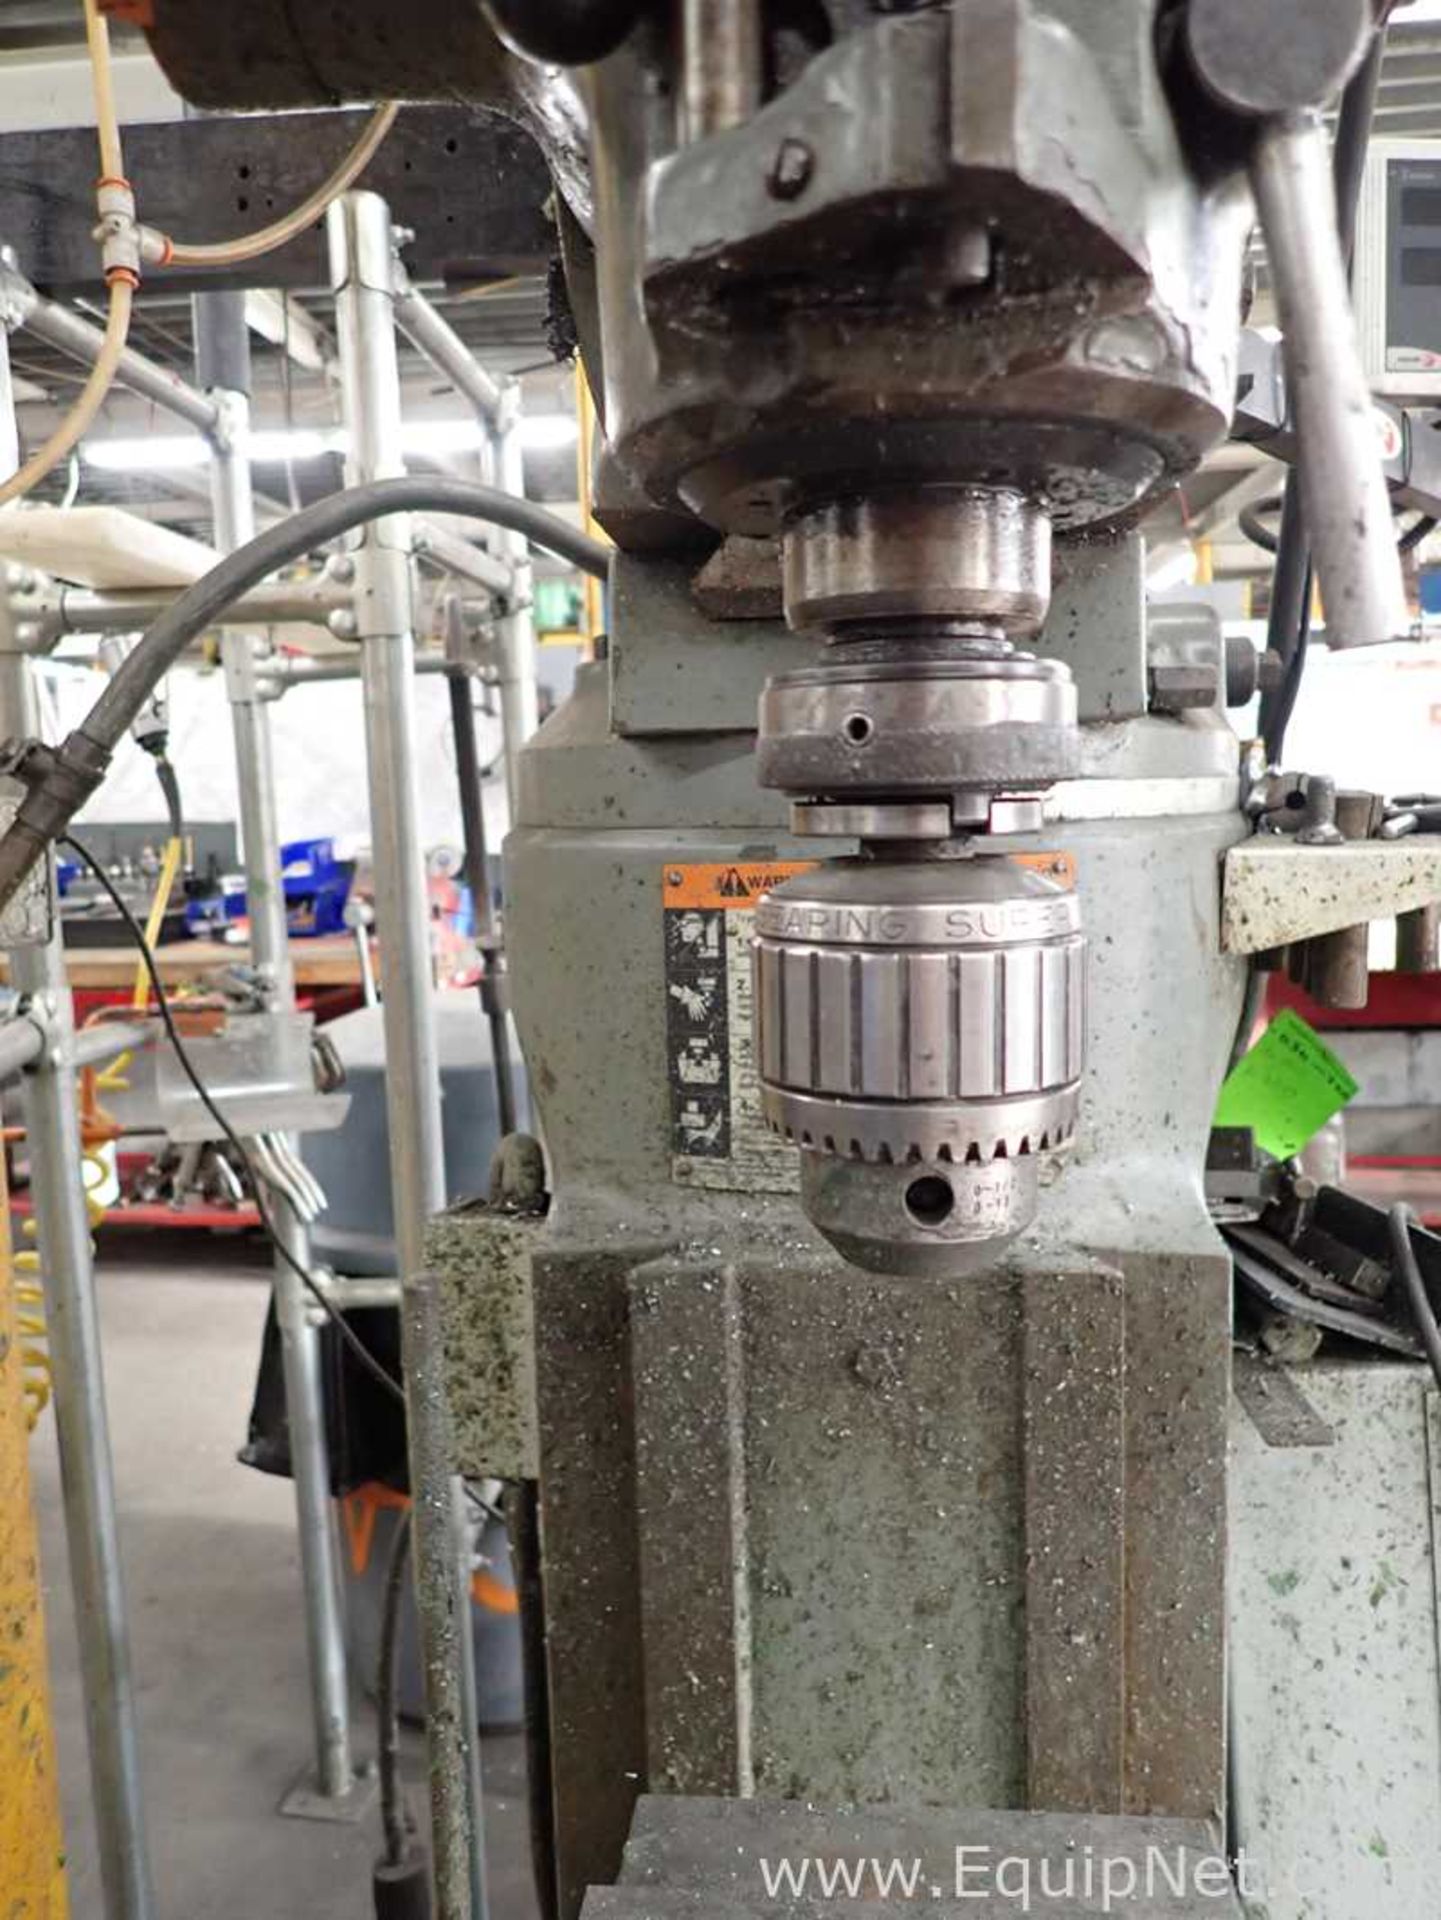 Bridgeport Series 1 CNC Vertical Milling, Drilling and Boring Machine - Image 3 of 6